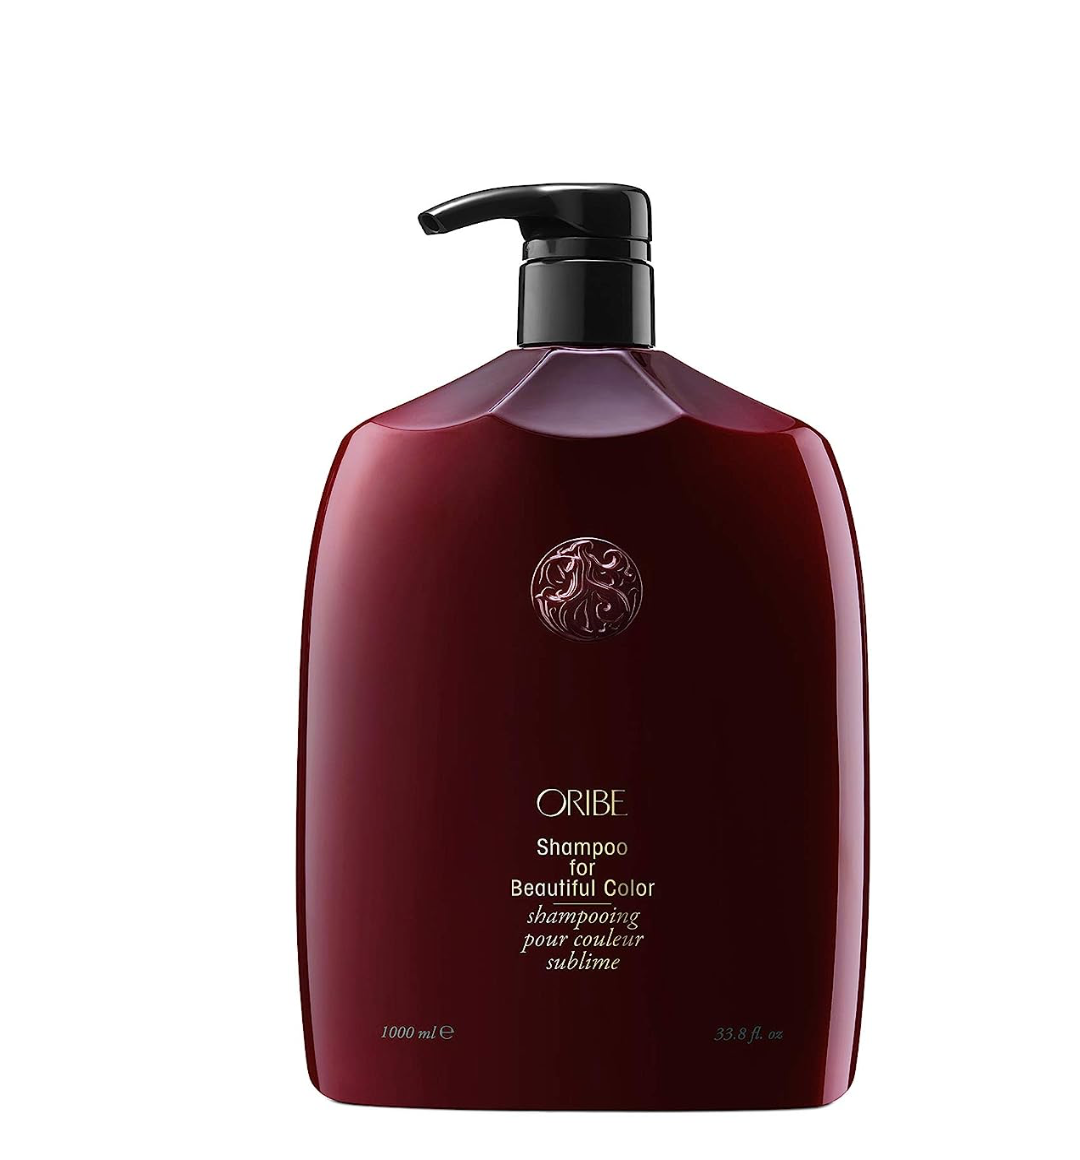 Oribe Shampoo for Beautiful Color Bottle 8.5fl